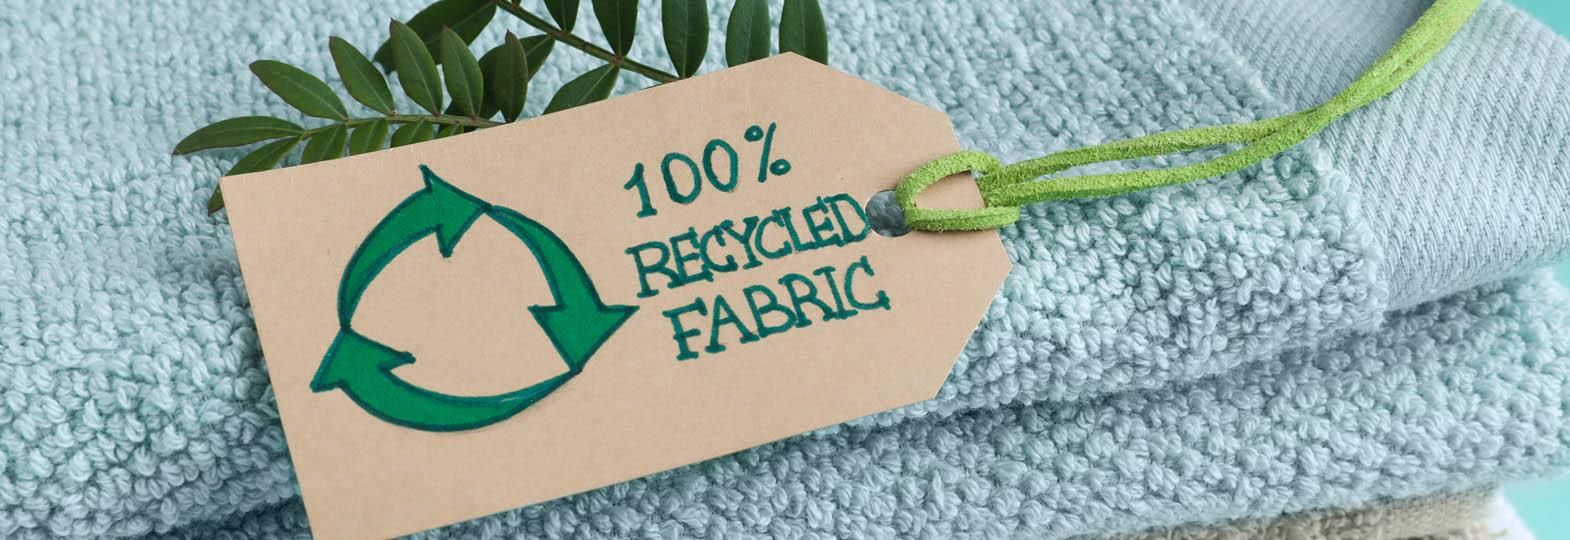 recycle fabric-big